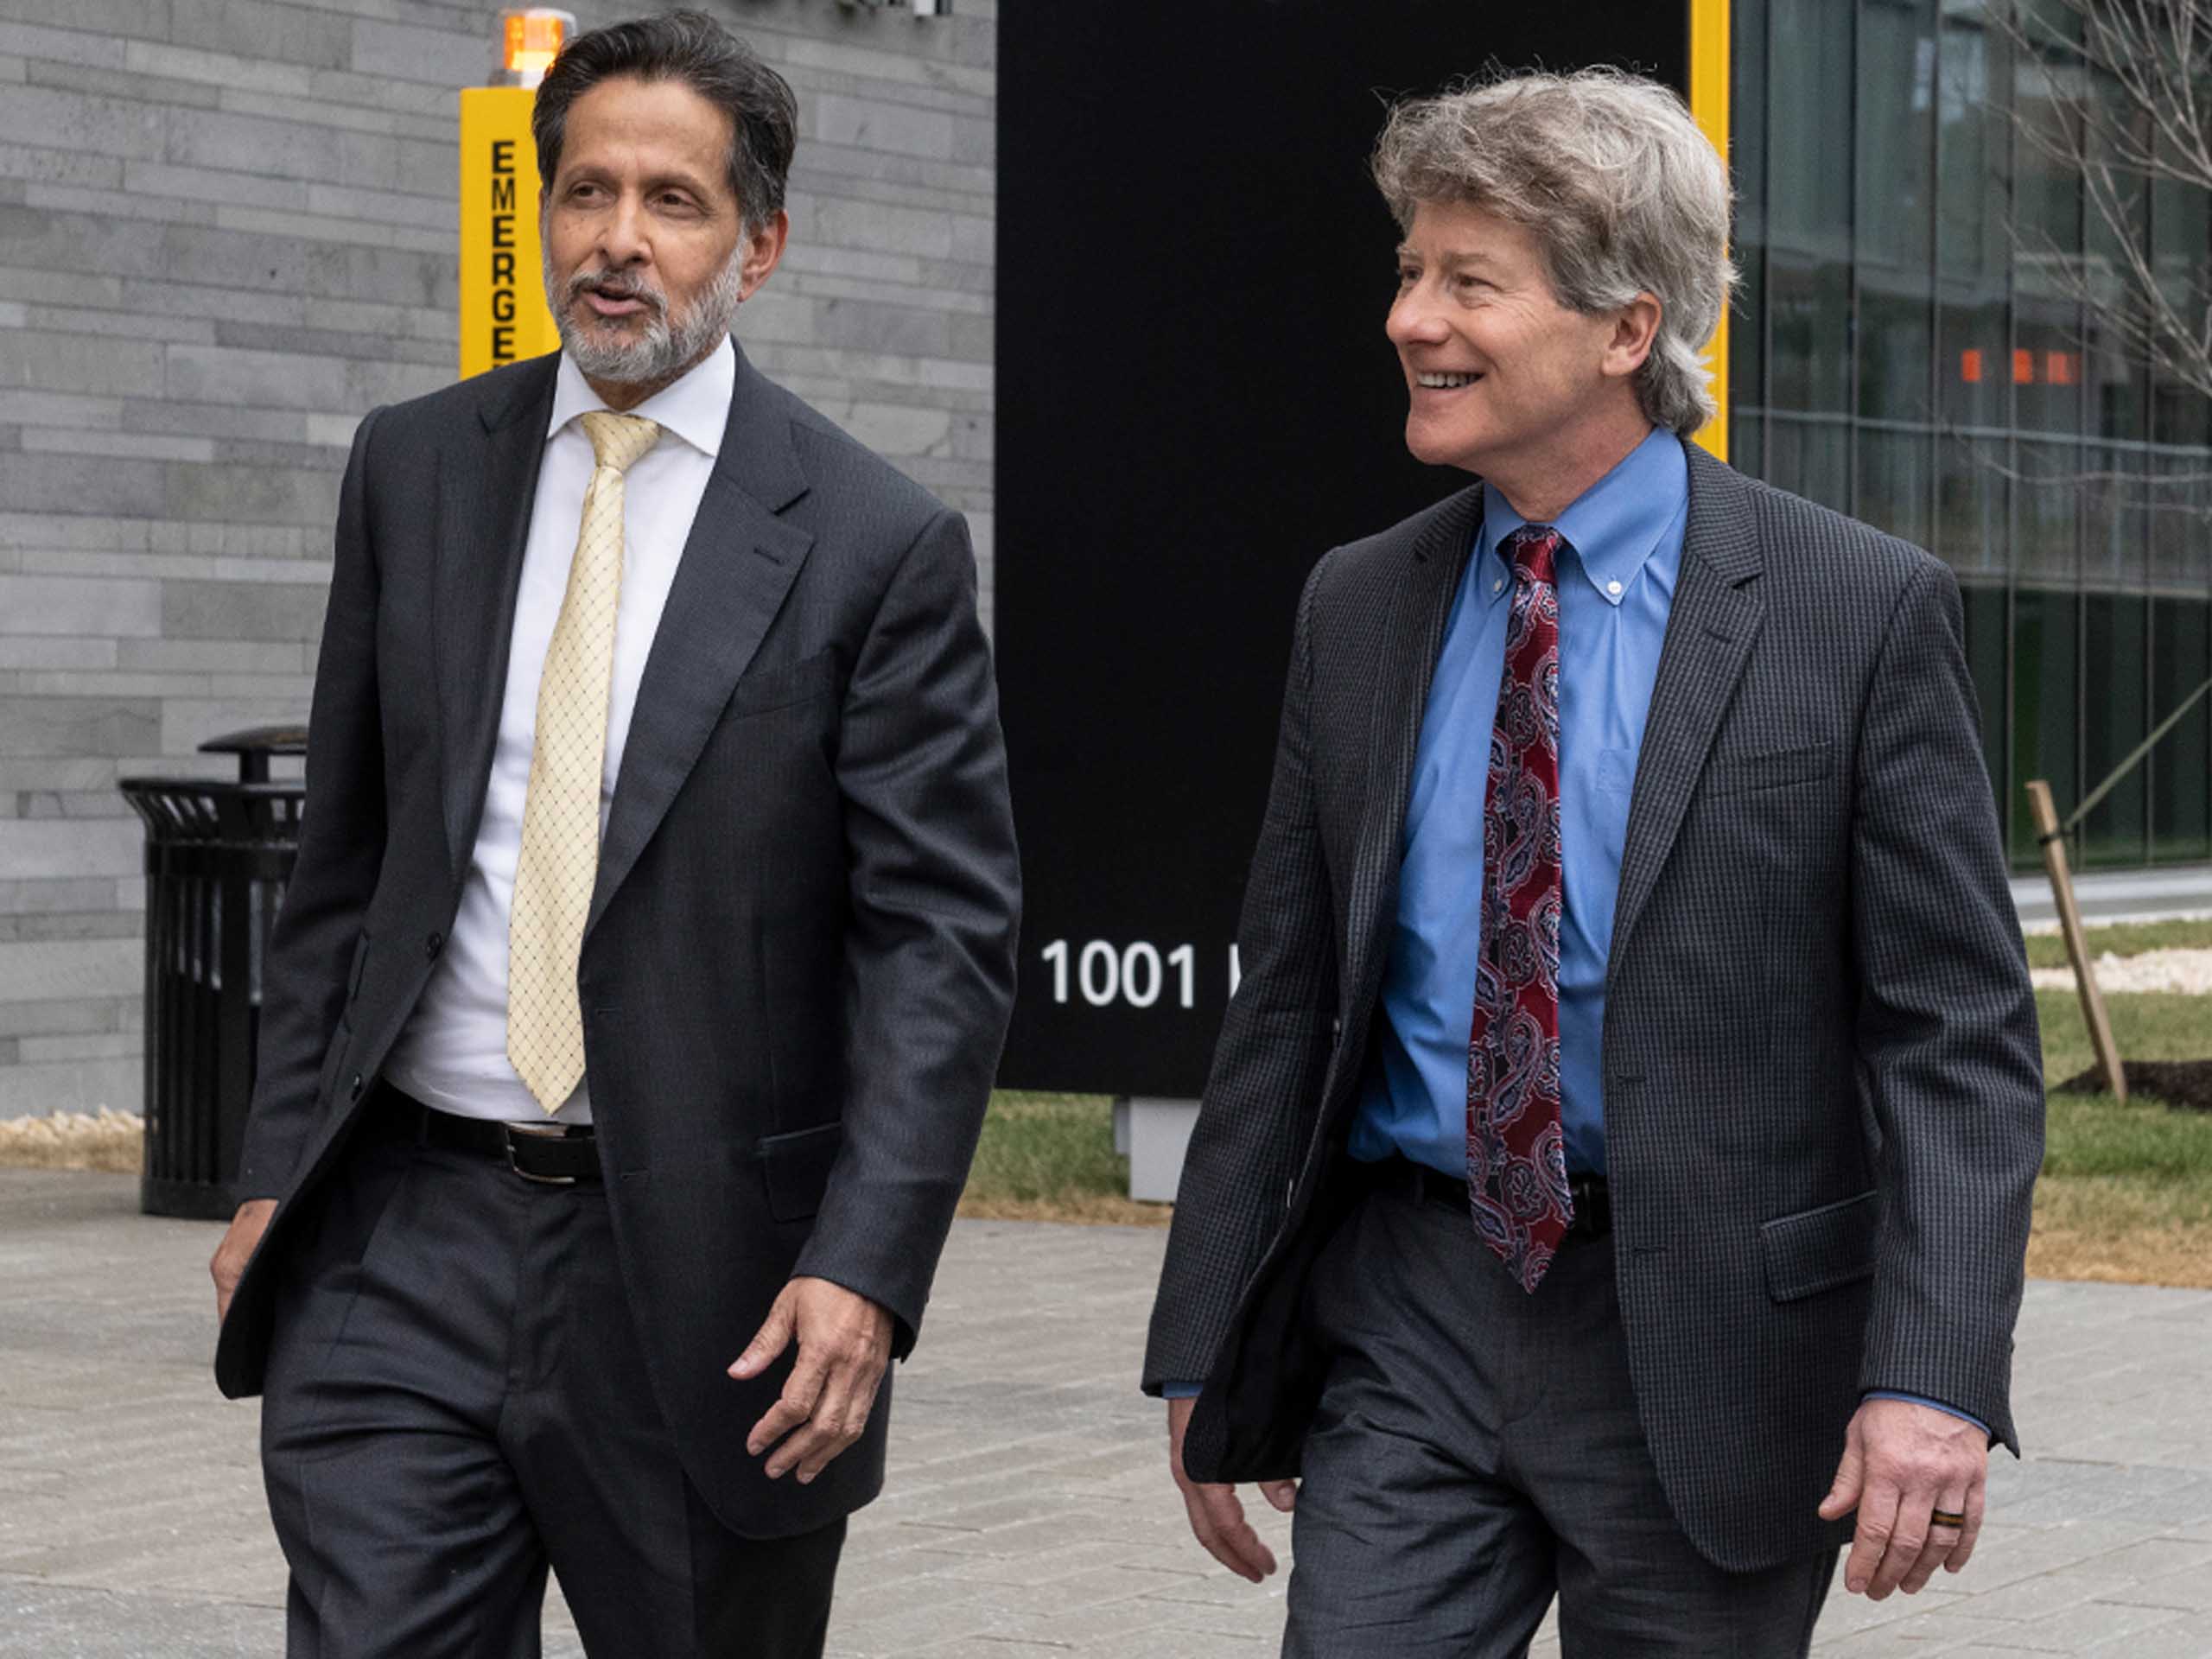 Arun Sanyal, M.D. and R. Todd Stravitz, M.D. walking outside